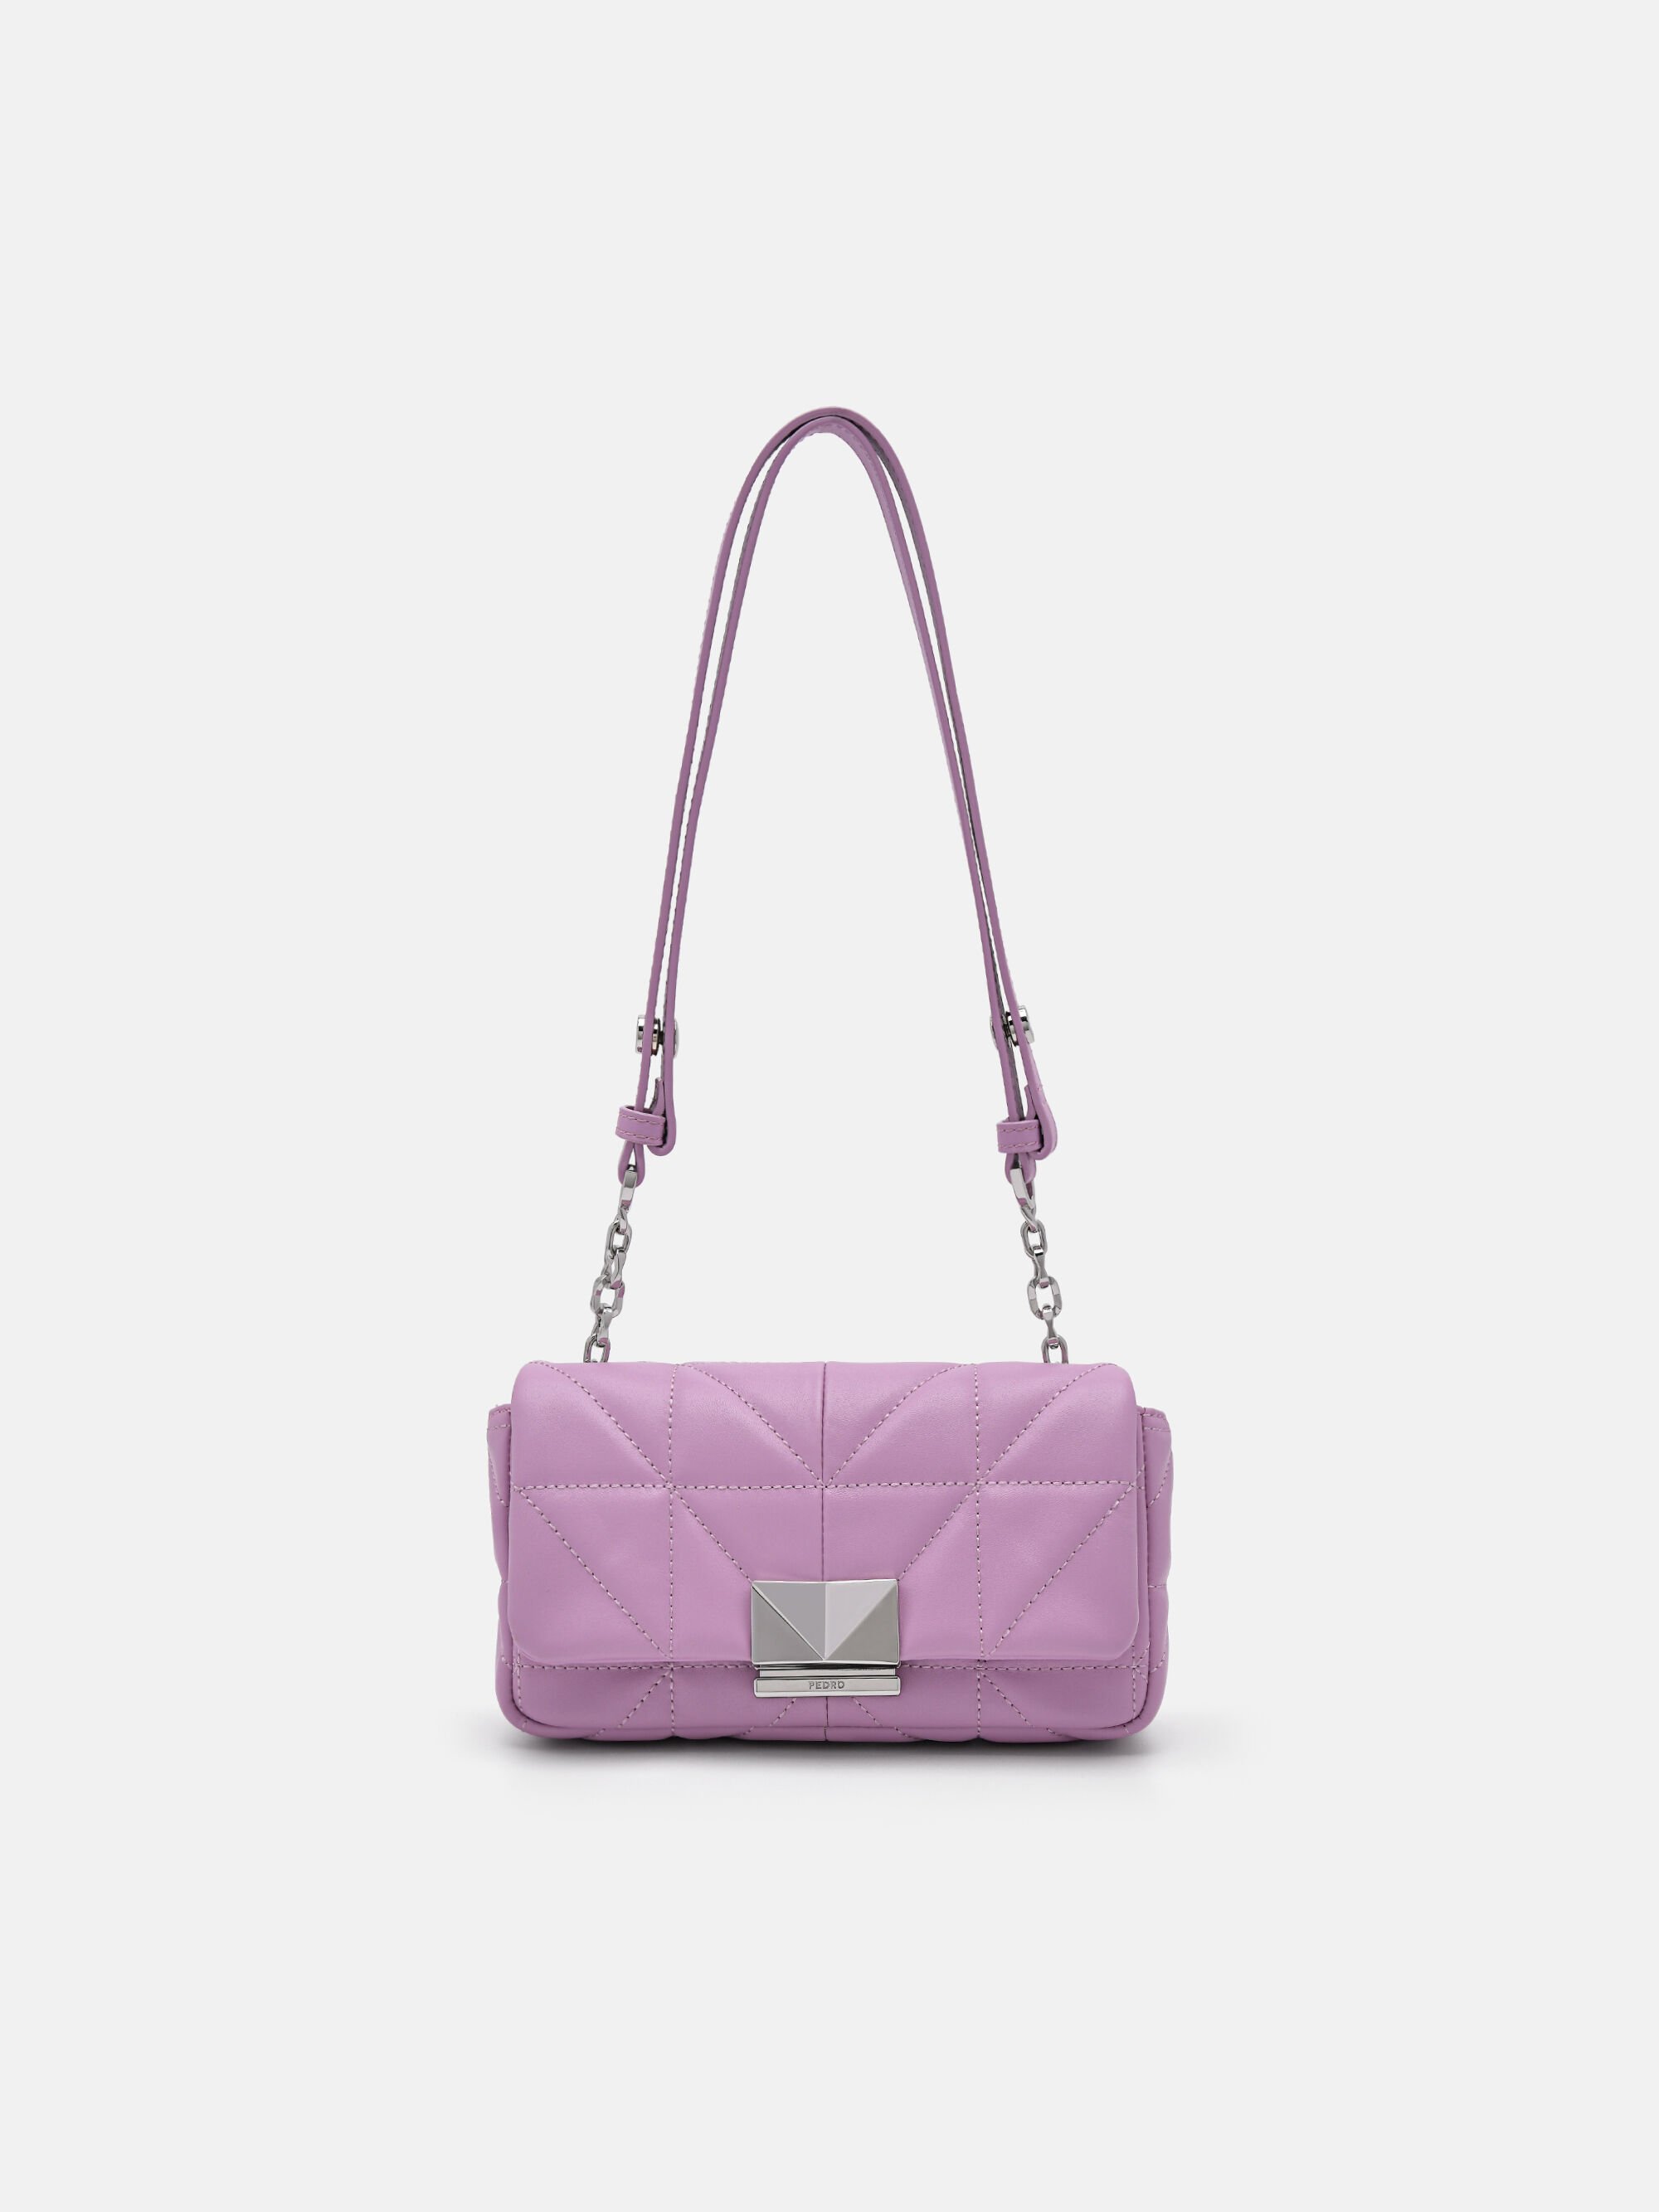 PEDRO Studio Leather Mini Shoulder Bag in Pixel, Purple